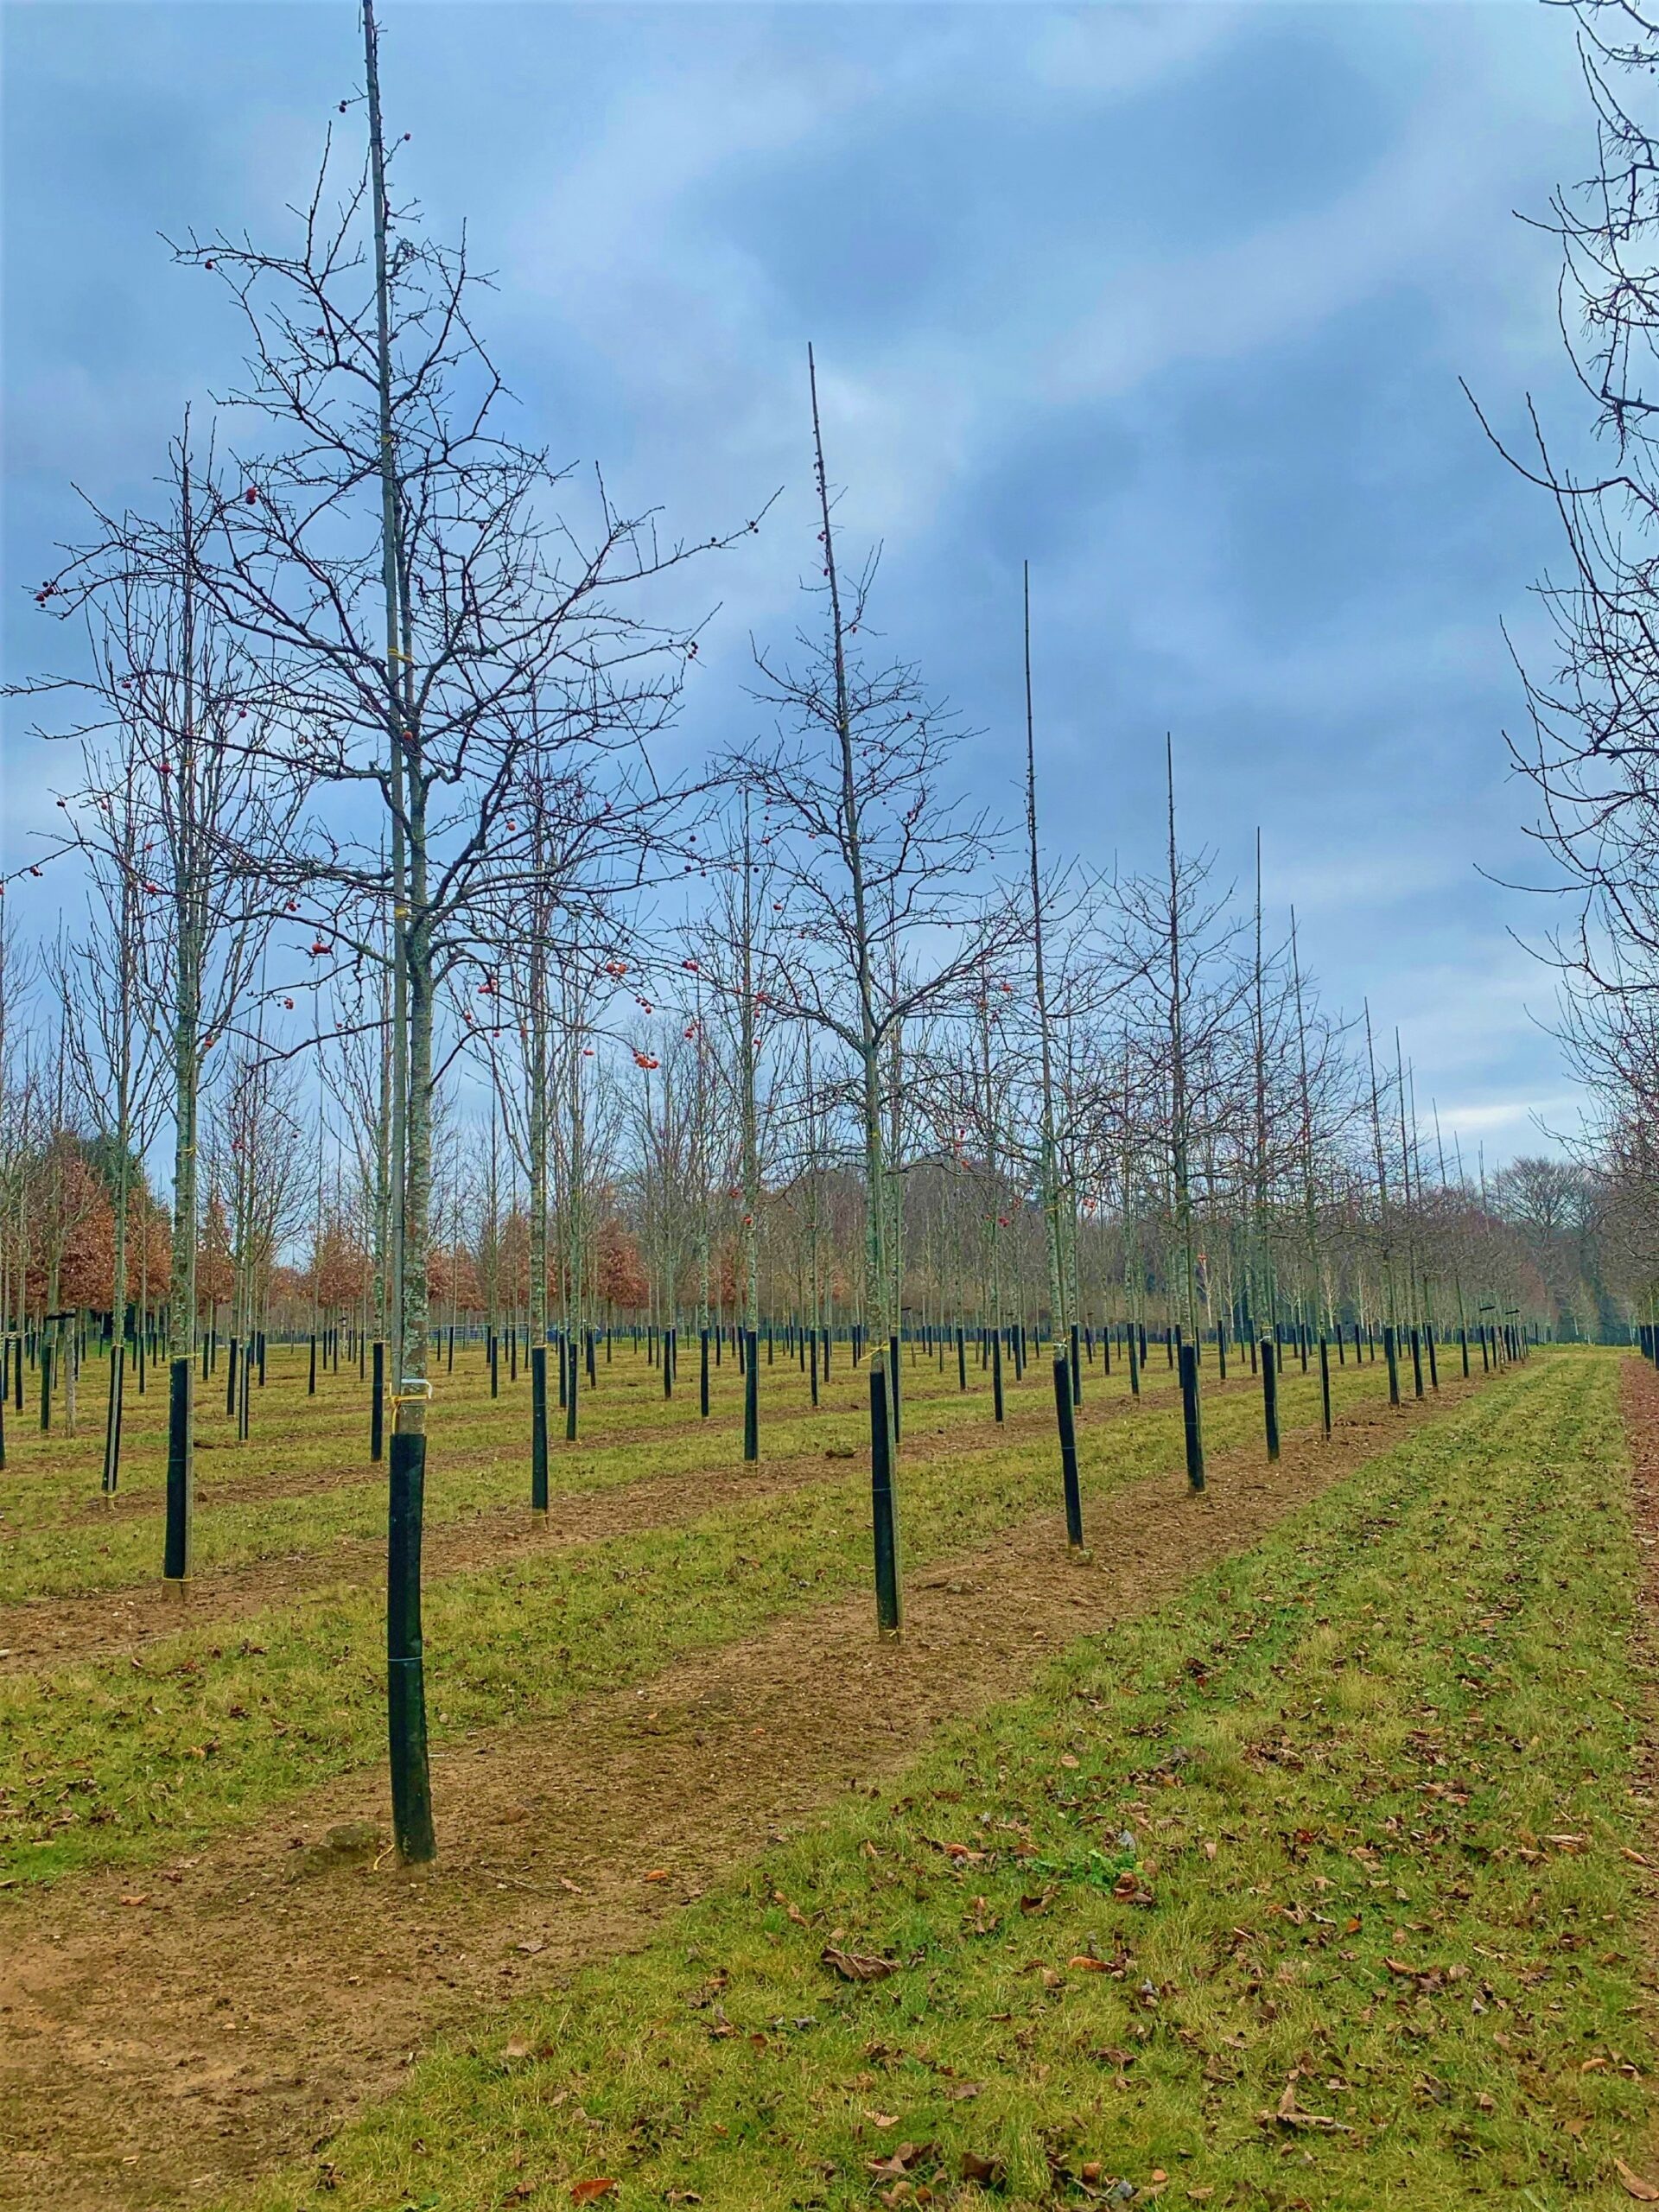 Malus evereste semi mature trees growing in field in rows in winter